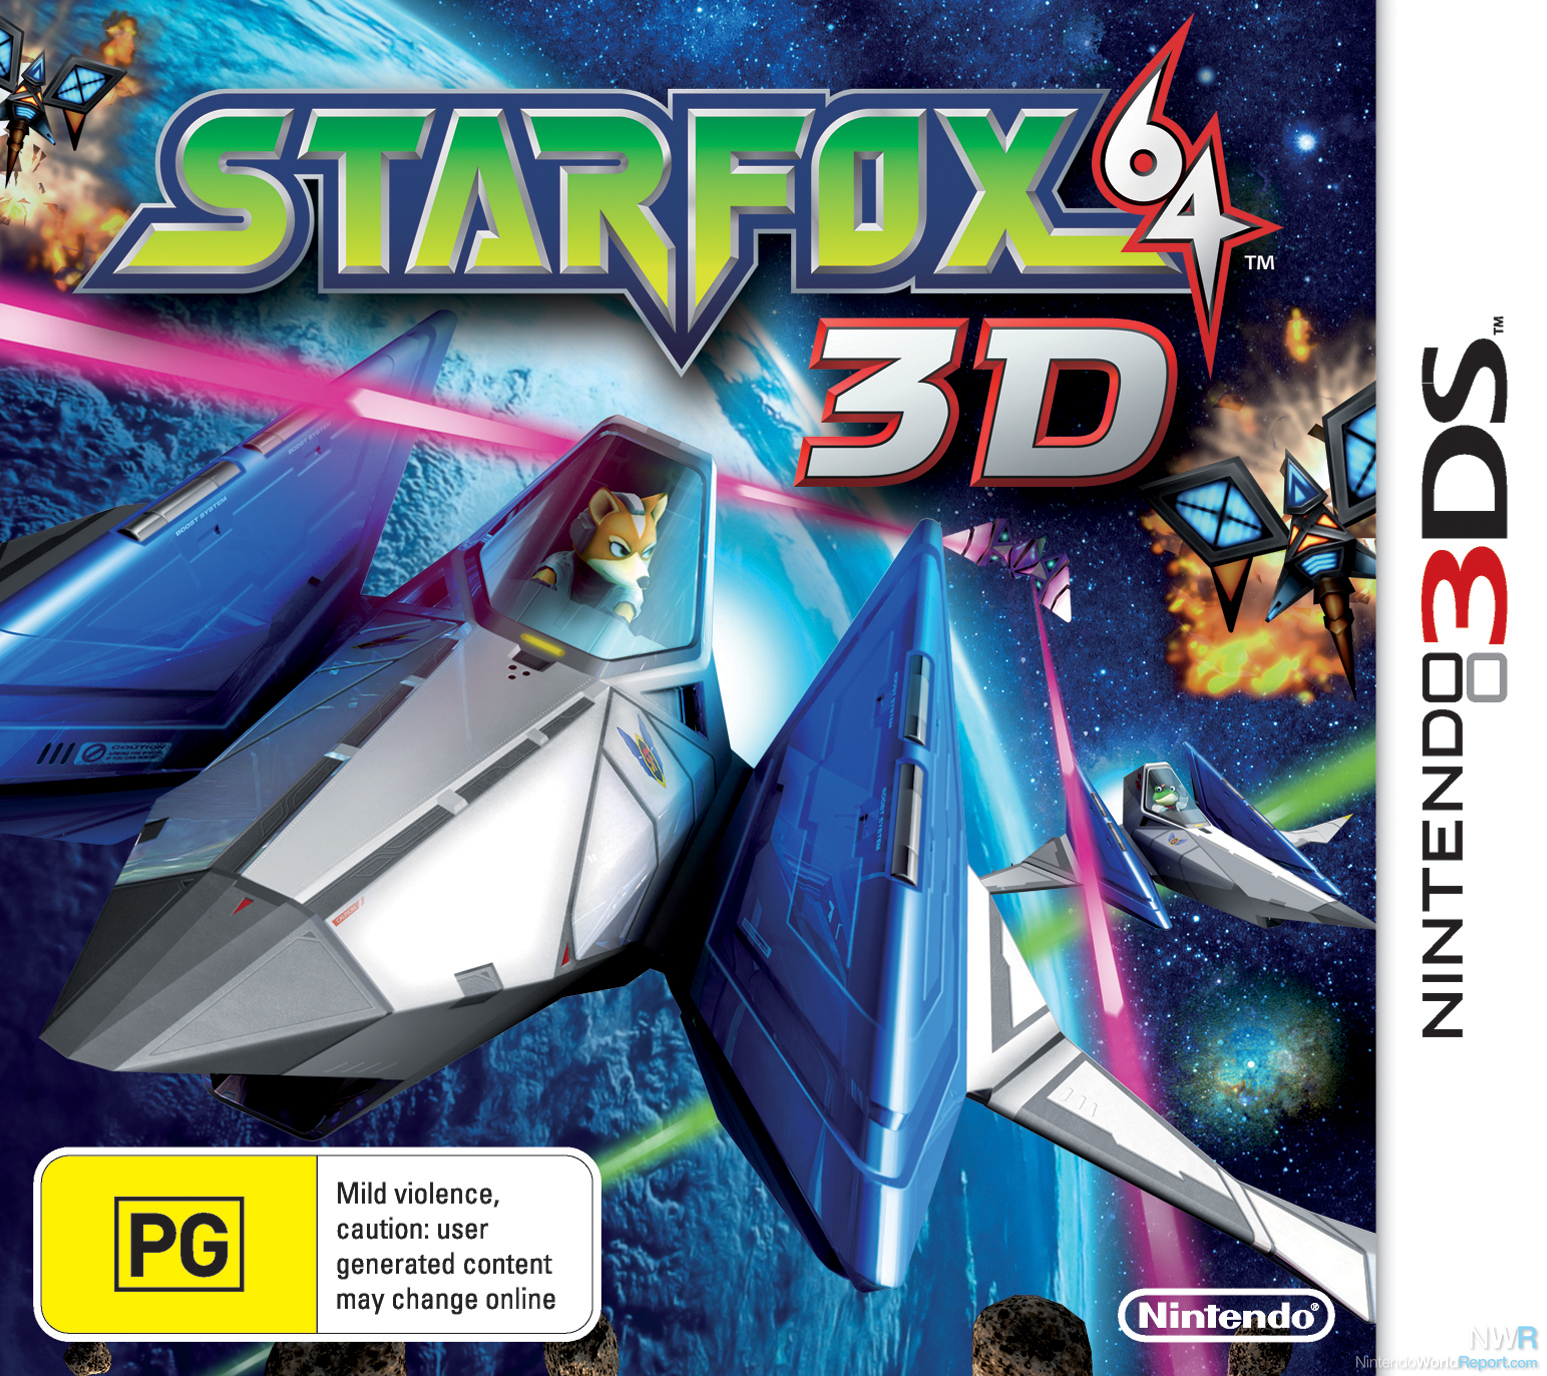 Star Fox 64' Coming to WiiU Virtual Console This Week